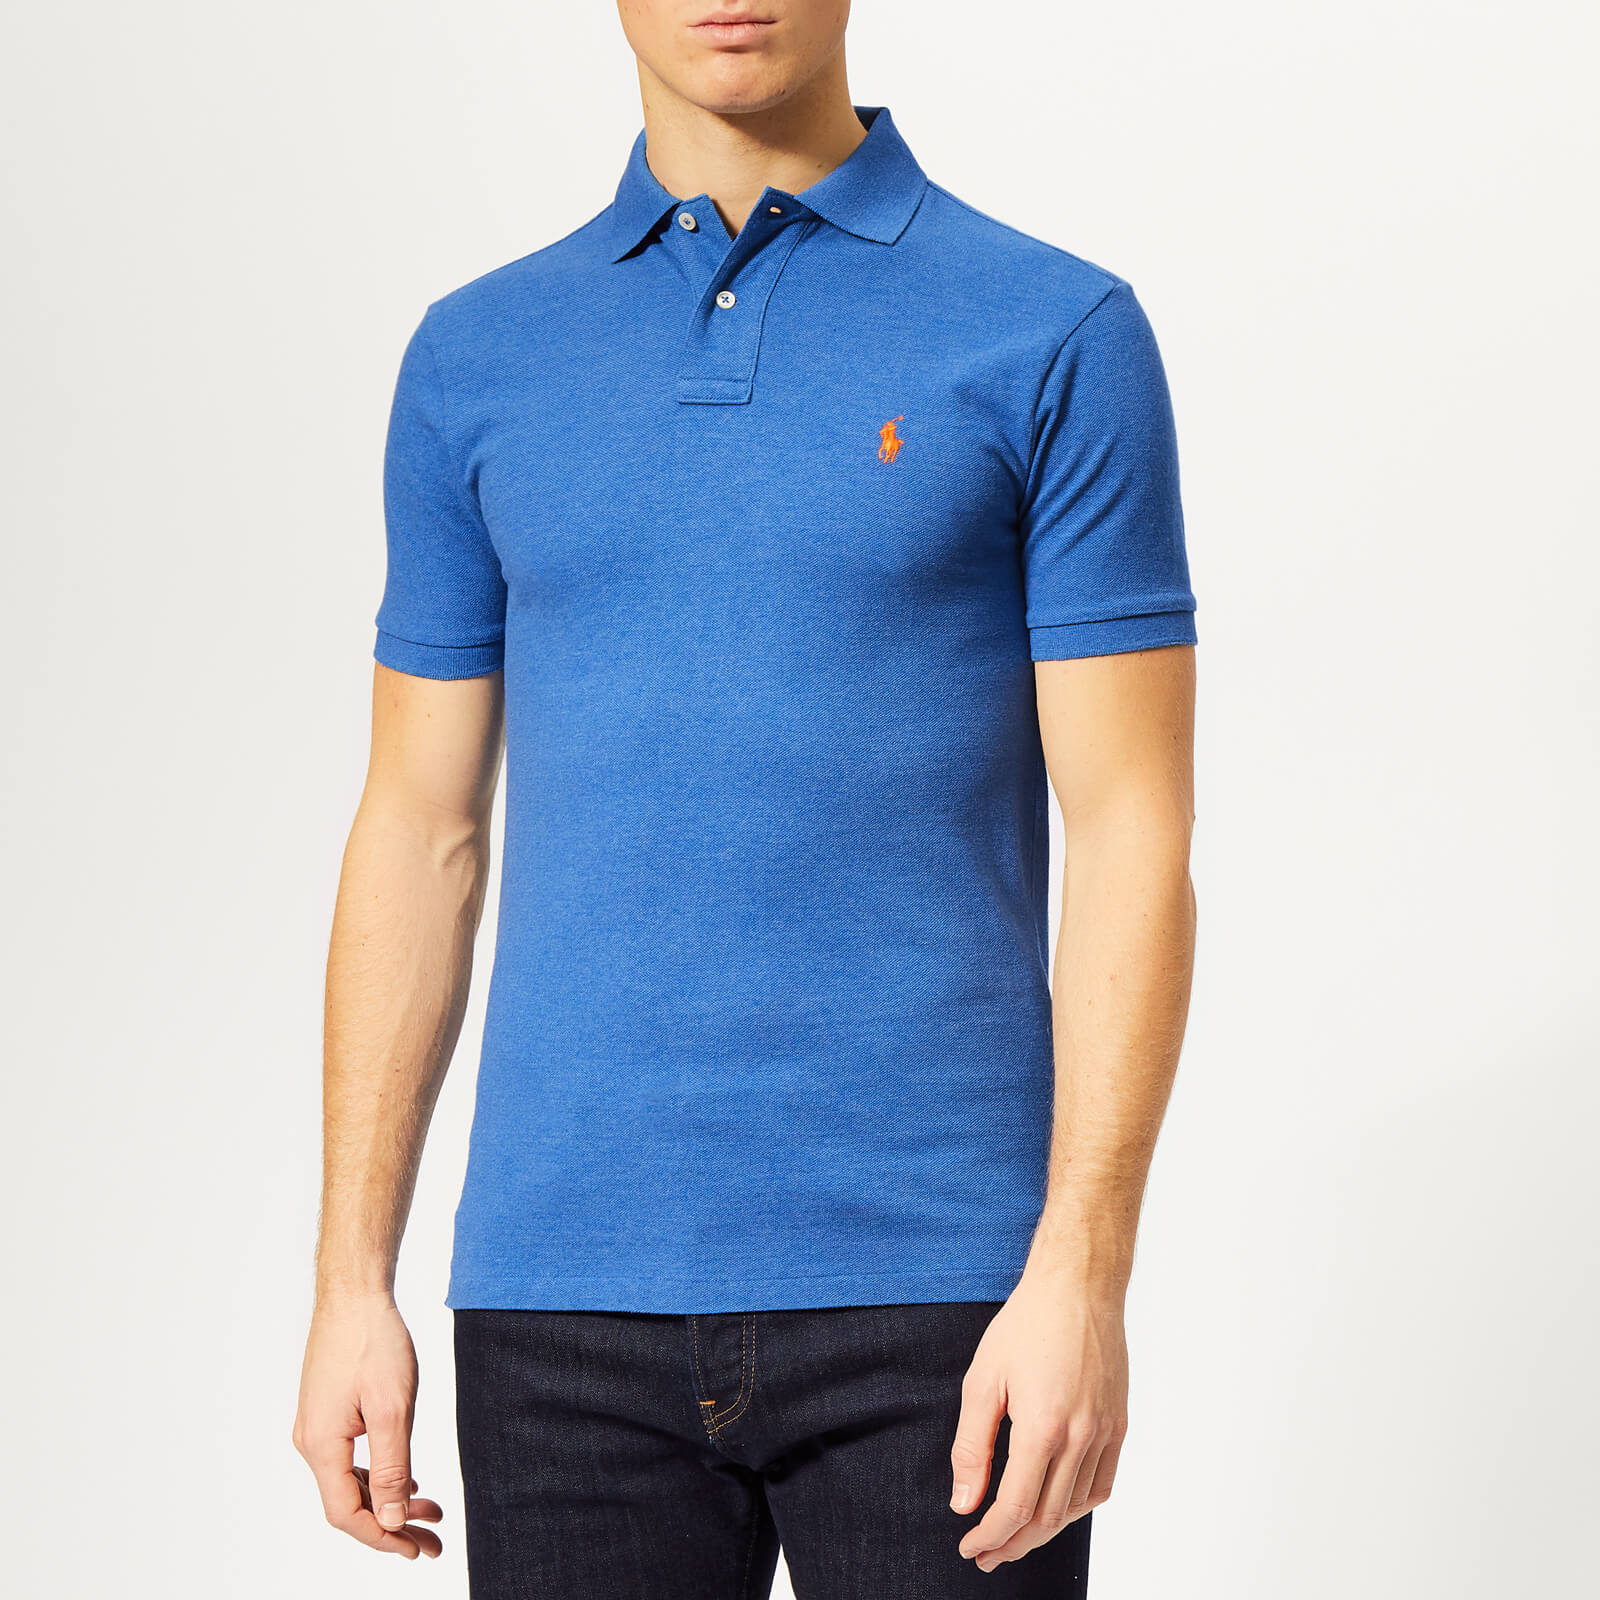 Polo Ralph Lauren Men's Slim Fit Mesh Polo Shirt - Dockside Blue Heather